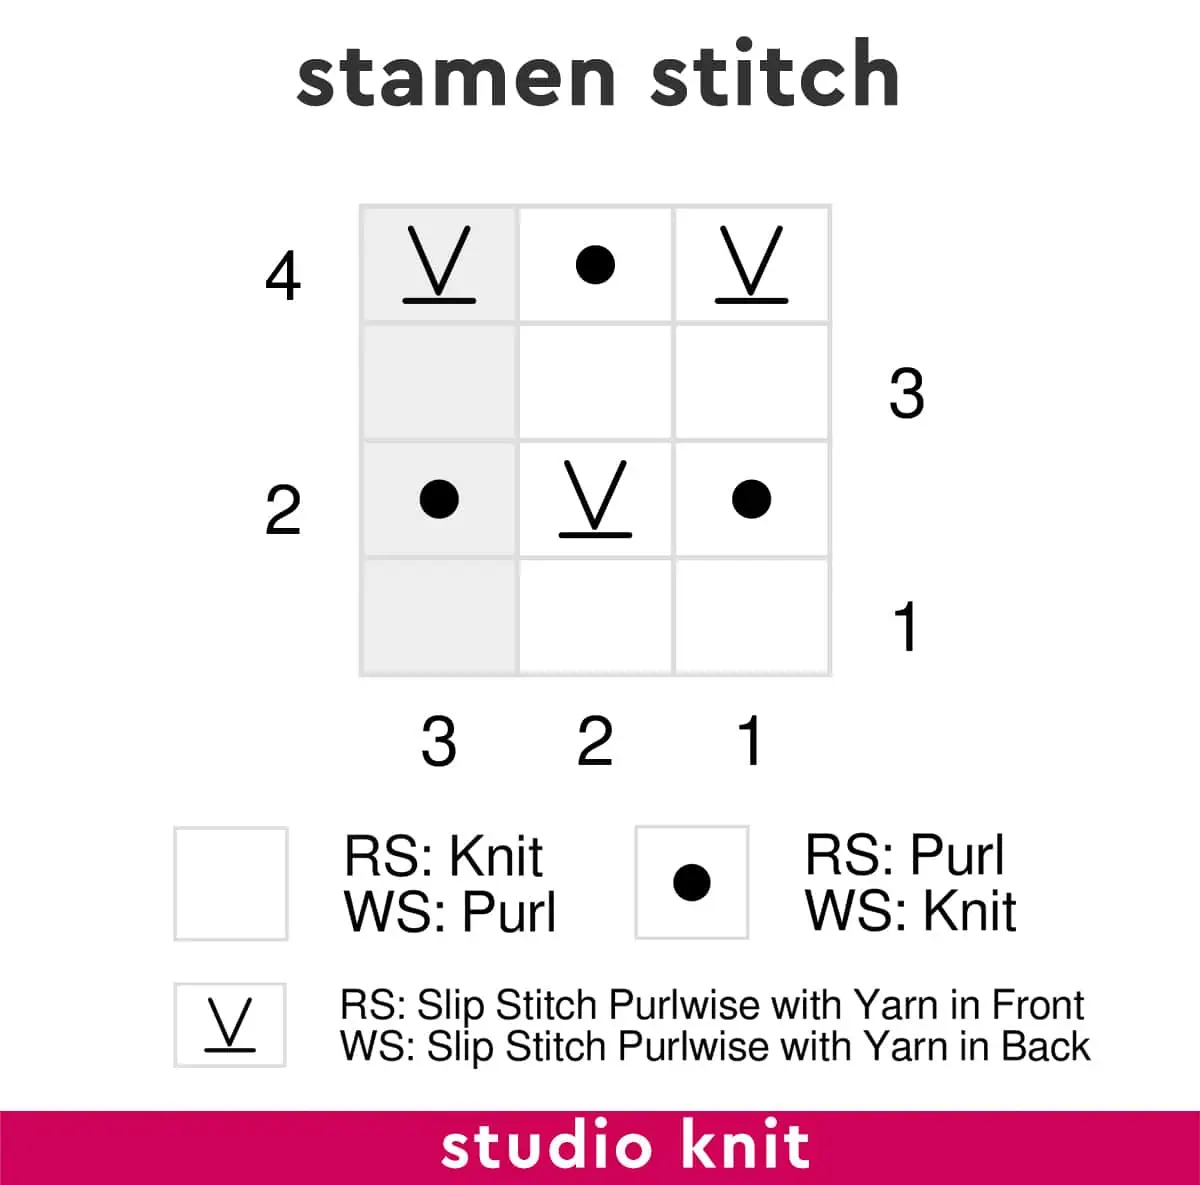 Knitting Chart of the Stamen Stitch by Studio Knit.